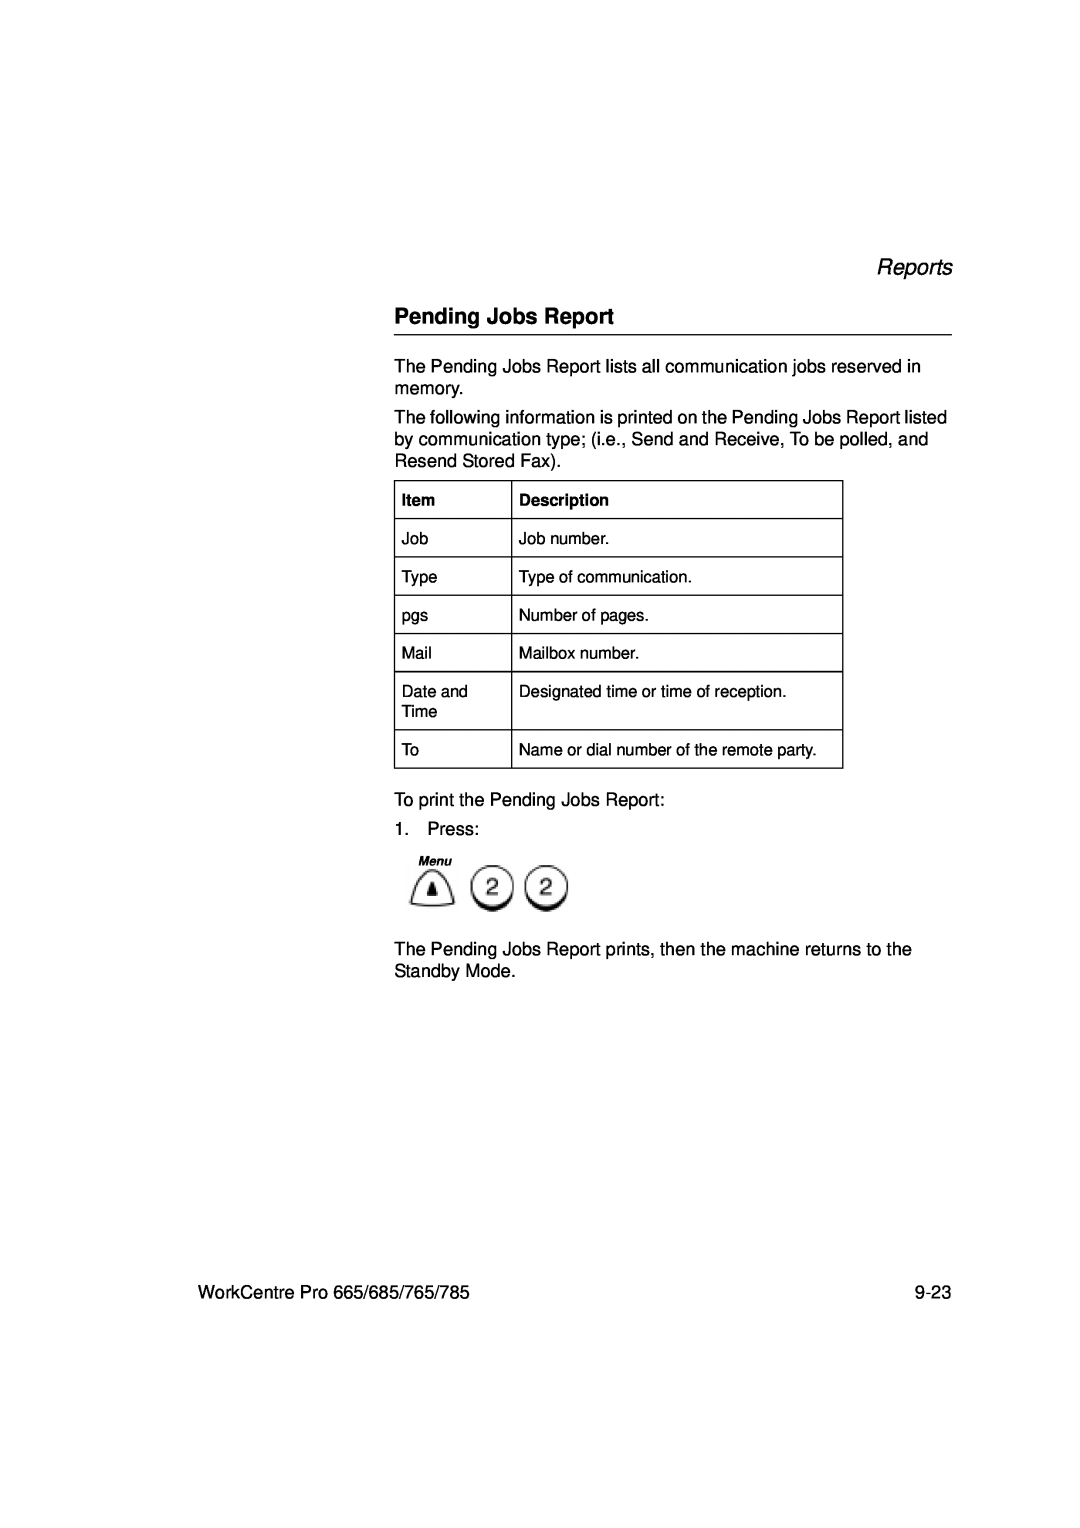 Xerox 665, 765, 685, 785 manual Pending Jobs Report, Reports 